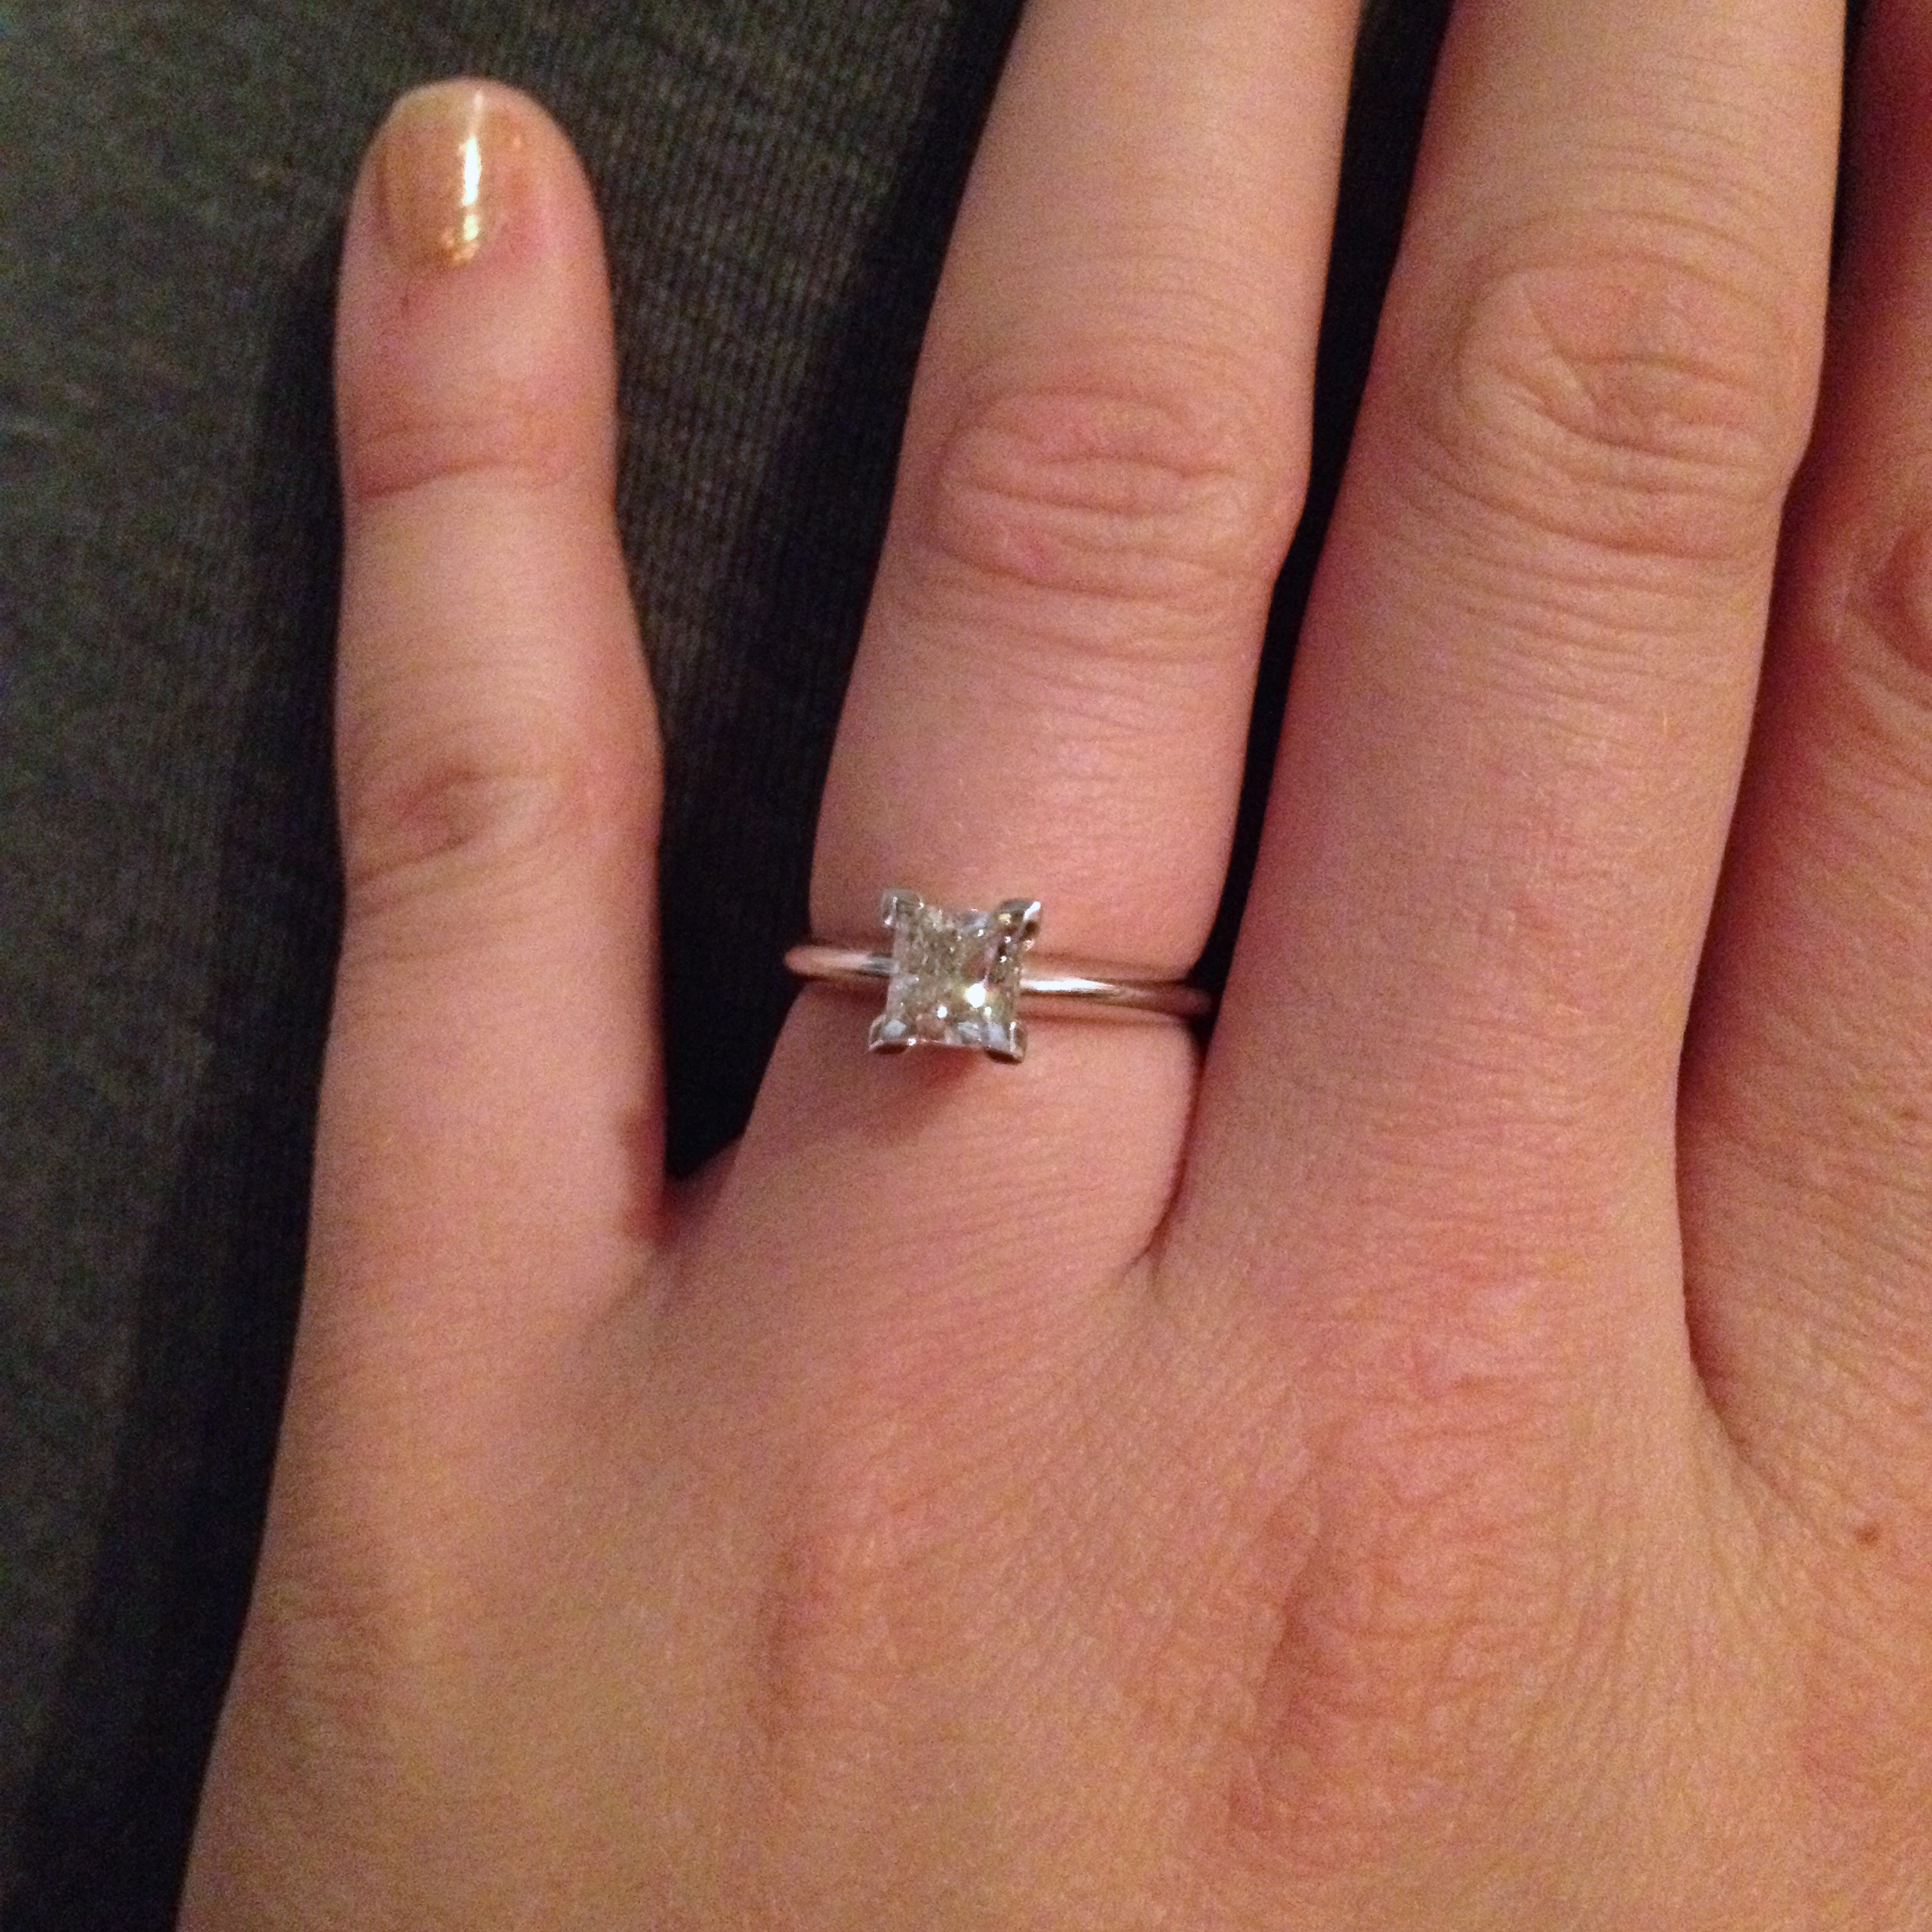 1 carat diamond engagement ring on finger